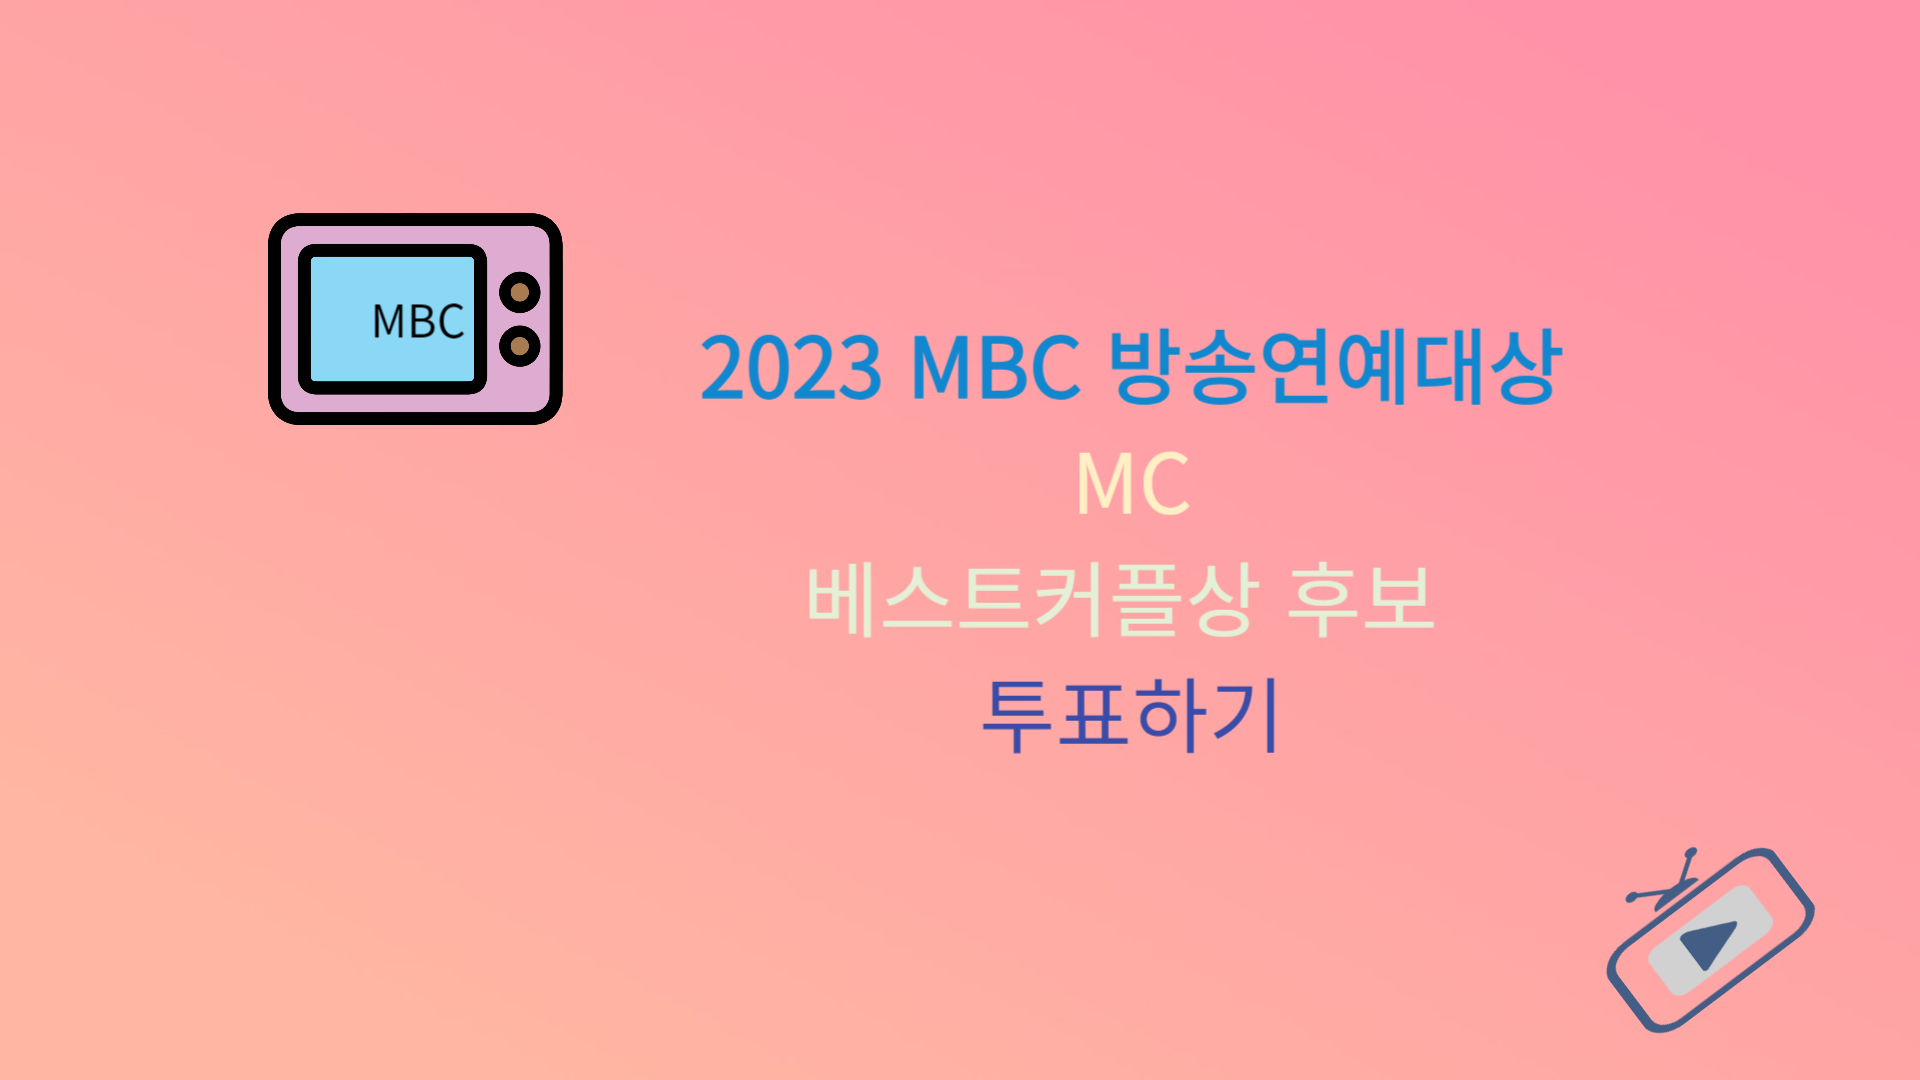 2023 MBC 방송연예대상 MC 베스트커플상 후보 투표